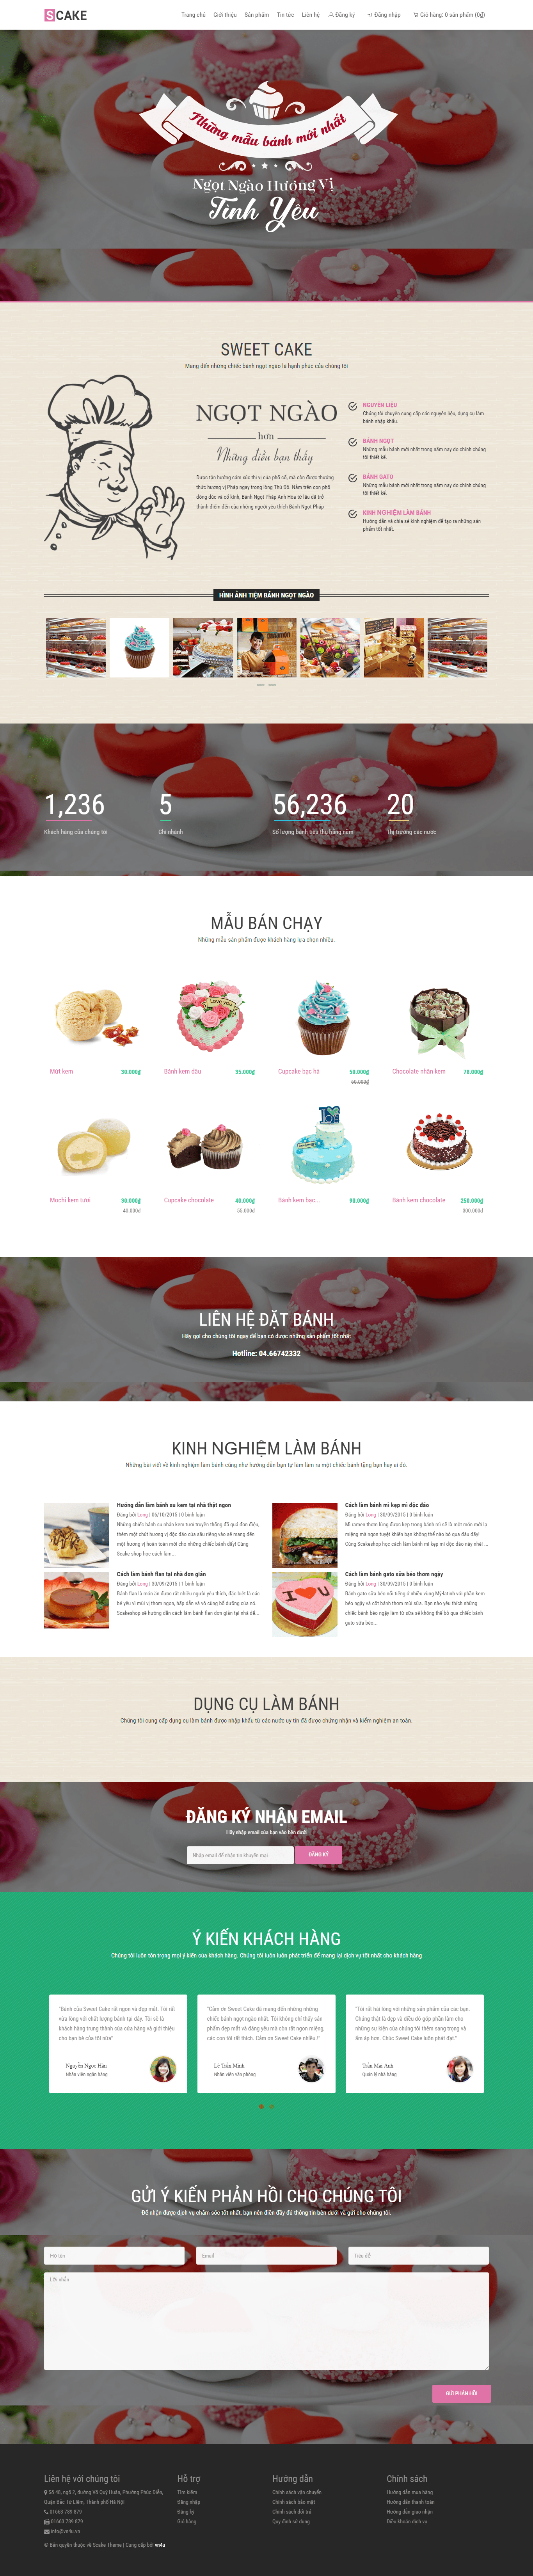 Website Shop Bánh Ngọt